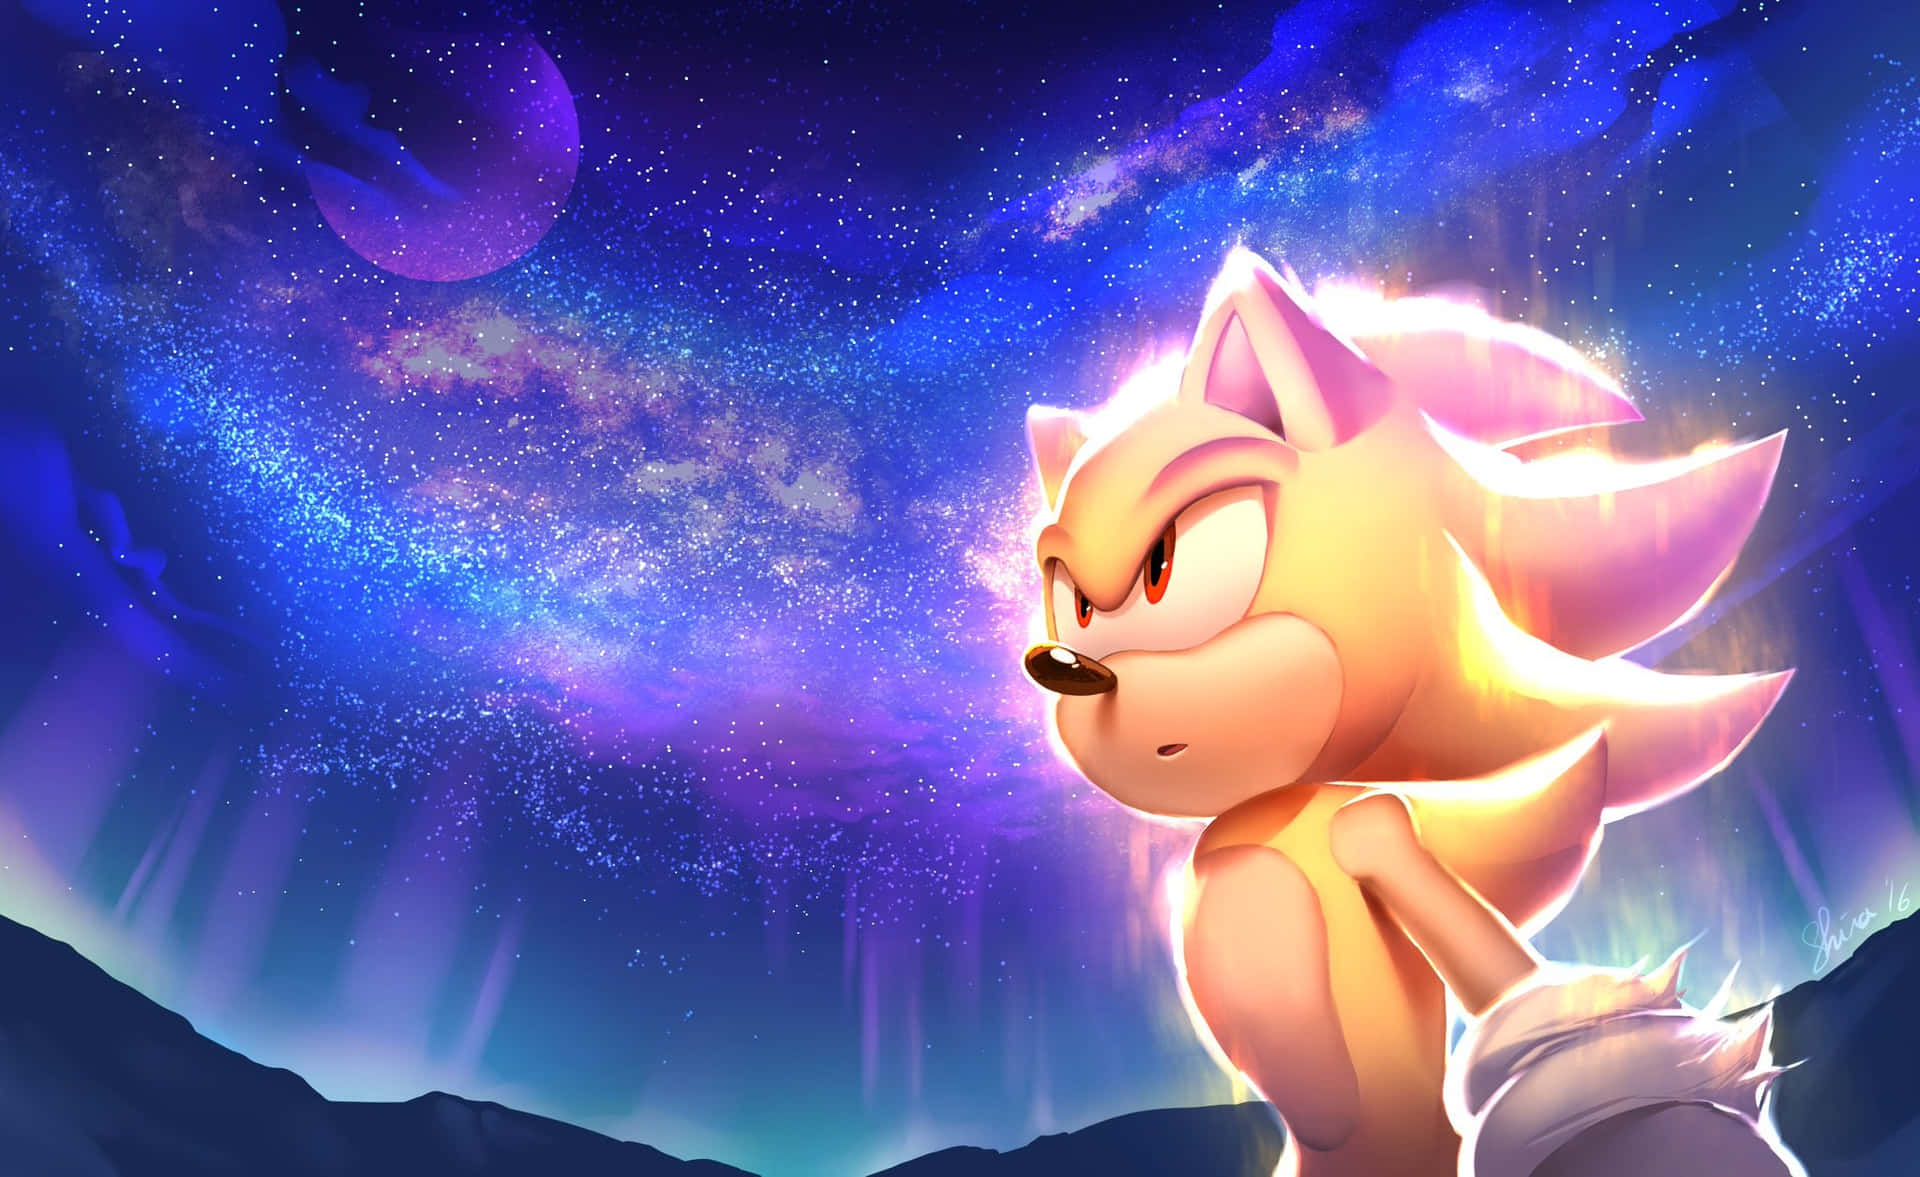 Sonic the Hedgehog Fan Art - Incredible Digital Illustration Wallpaper